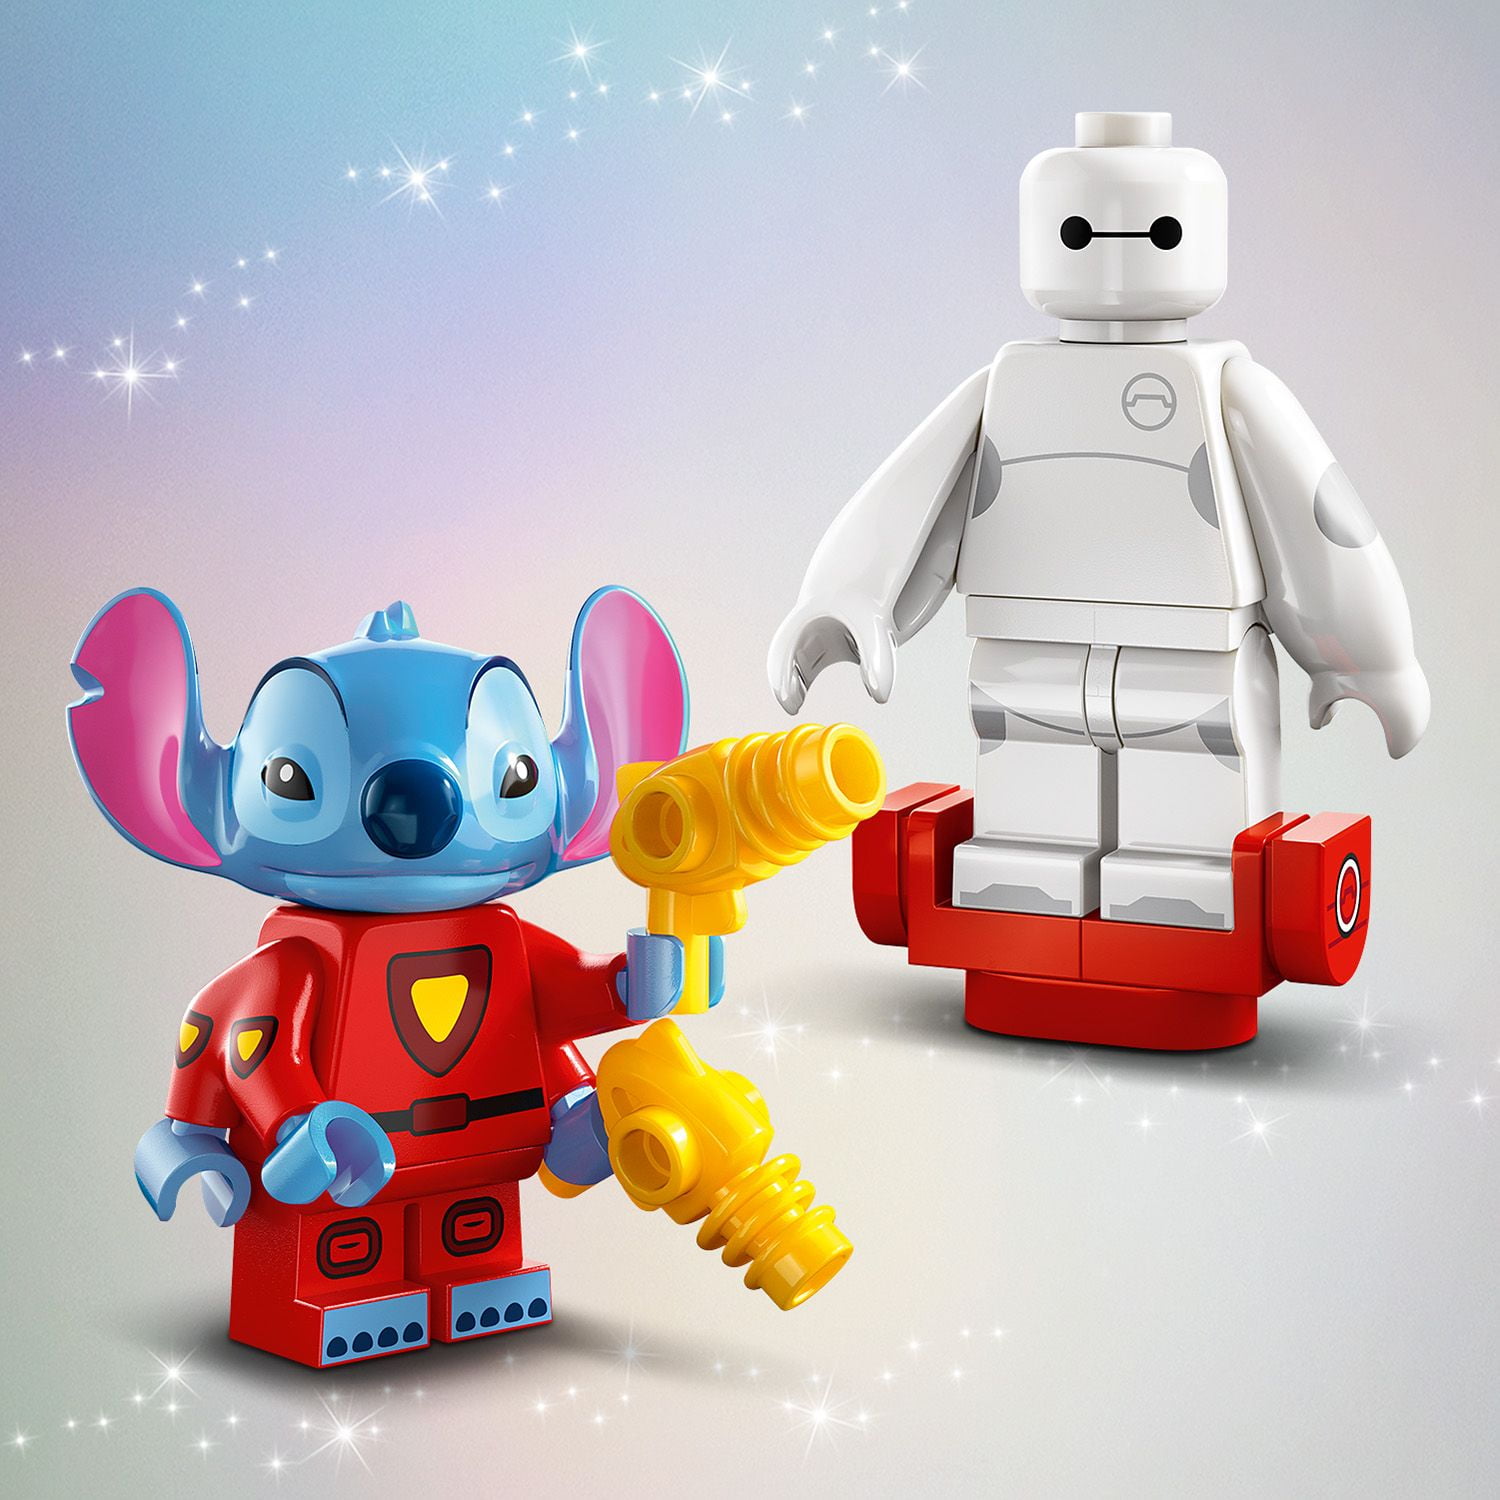 LEGO 66734 Minifigures Disney 100 6 Pack on US store